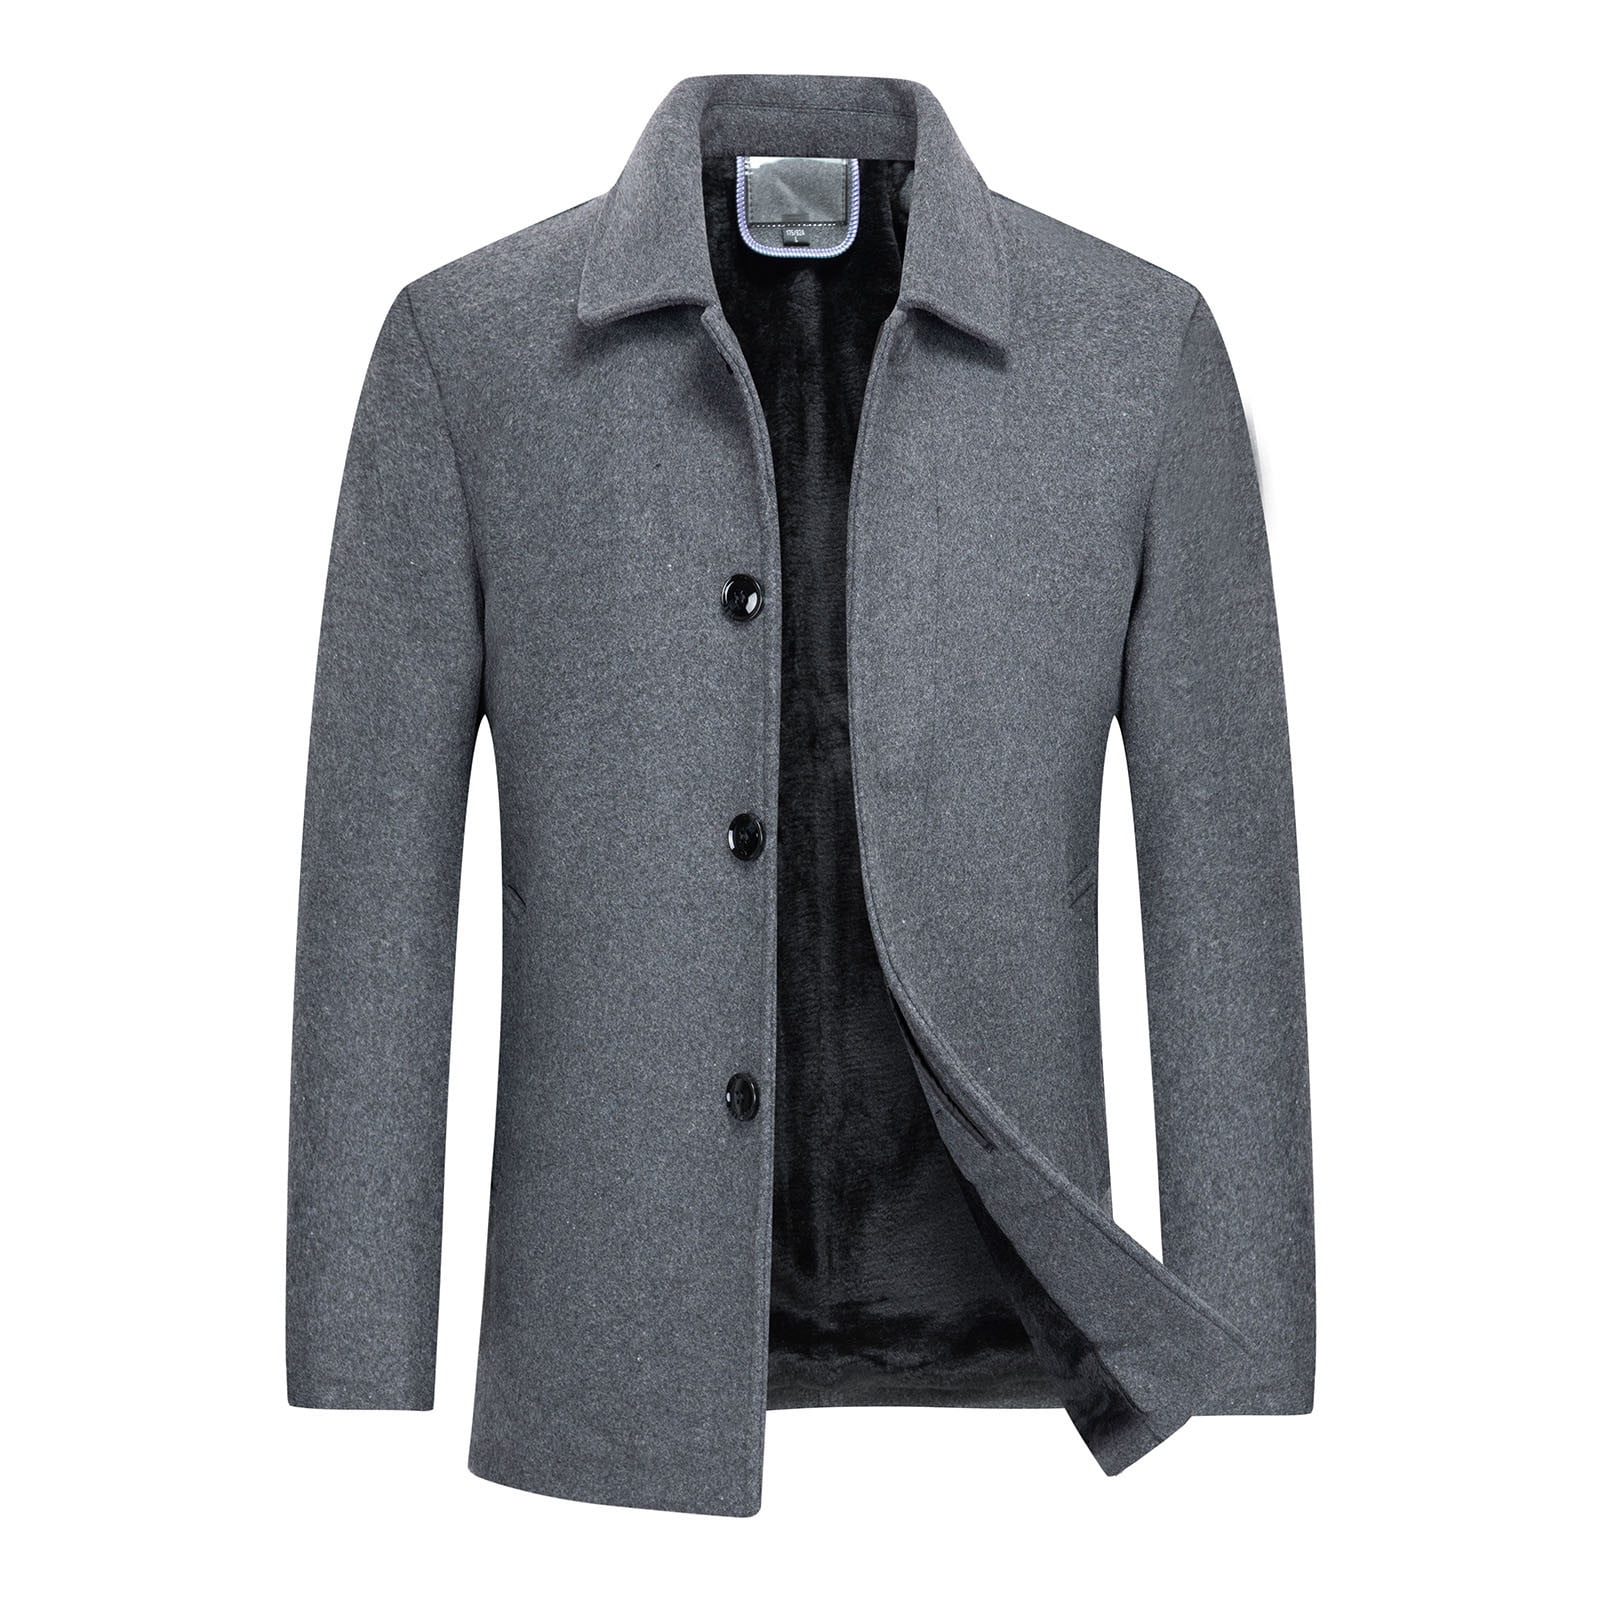 YYDGH Men's Plus Size Jackets-Windproof Bomber Jacket Full Zip Winter Warm  Padded Coats Outwear(Black,3XL)